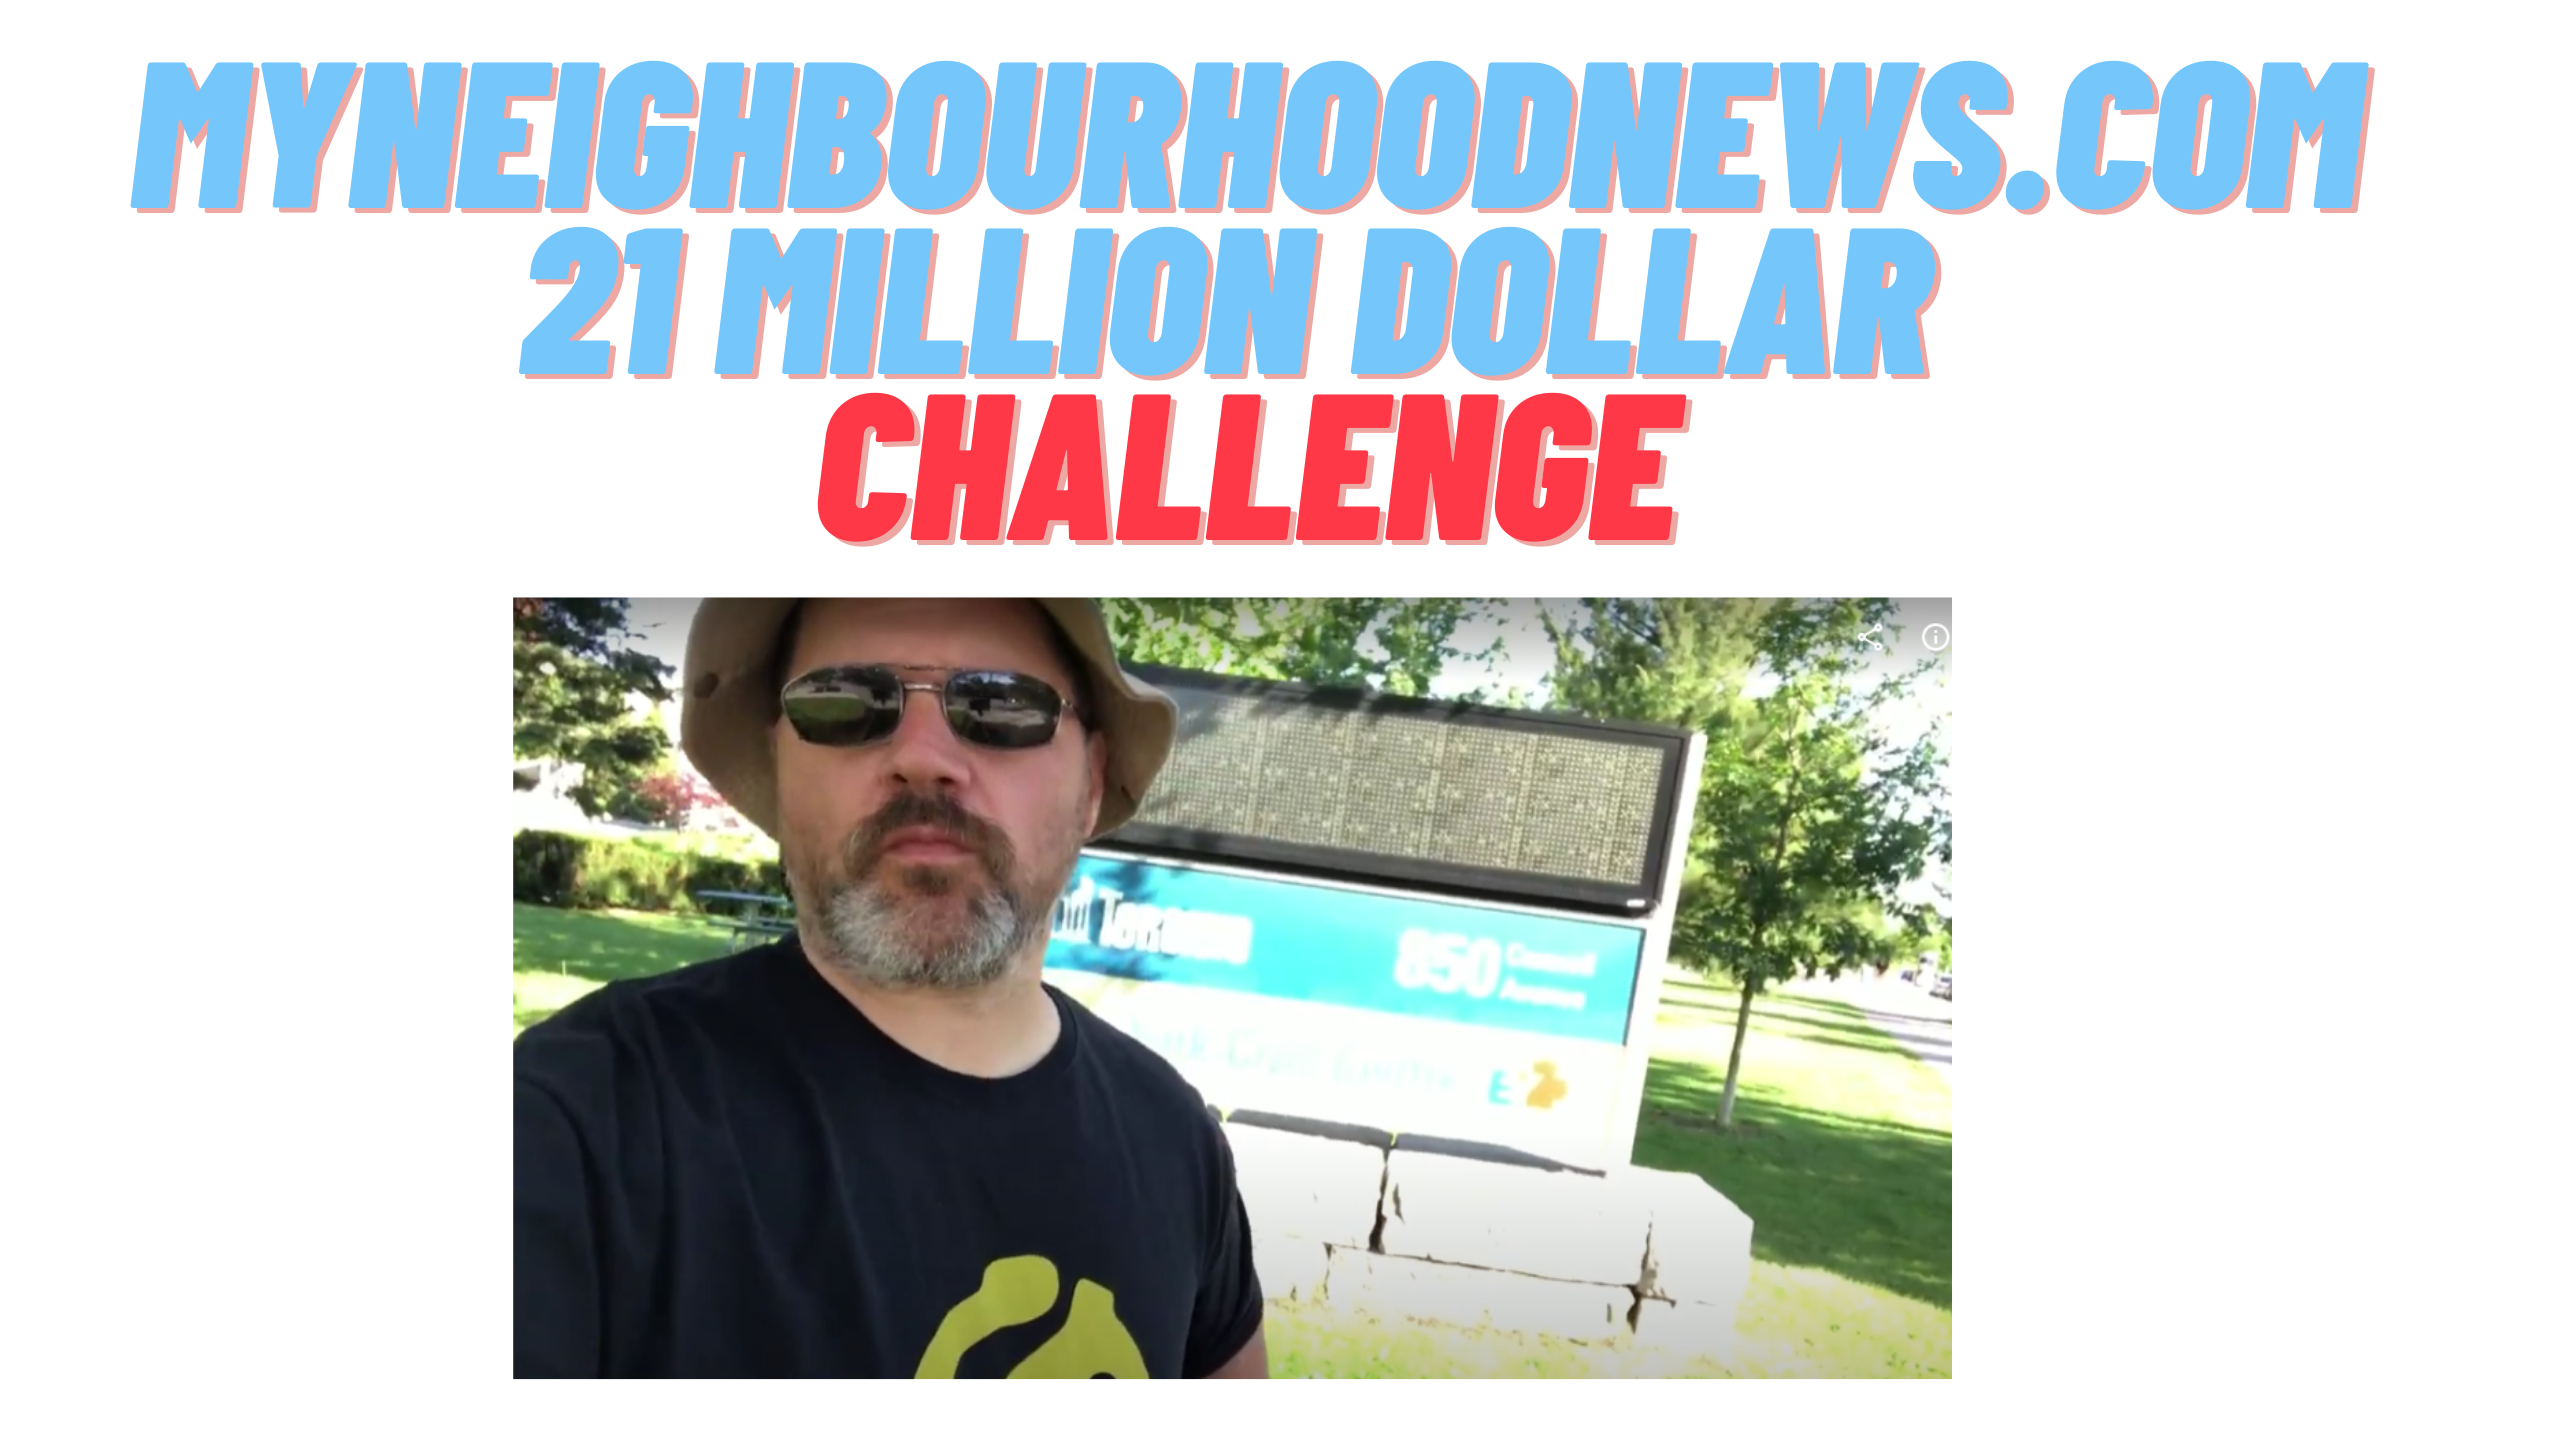 $21 Million Dollar Challenge